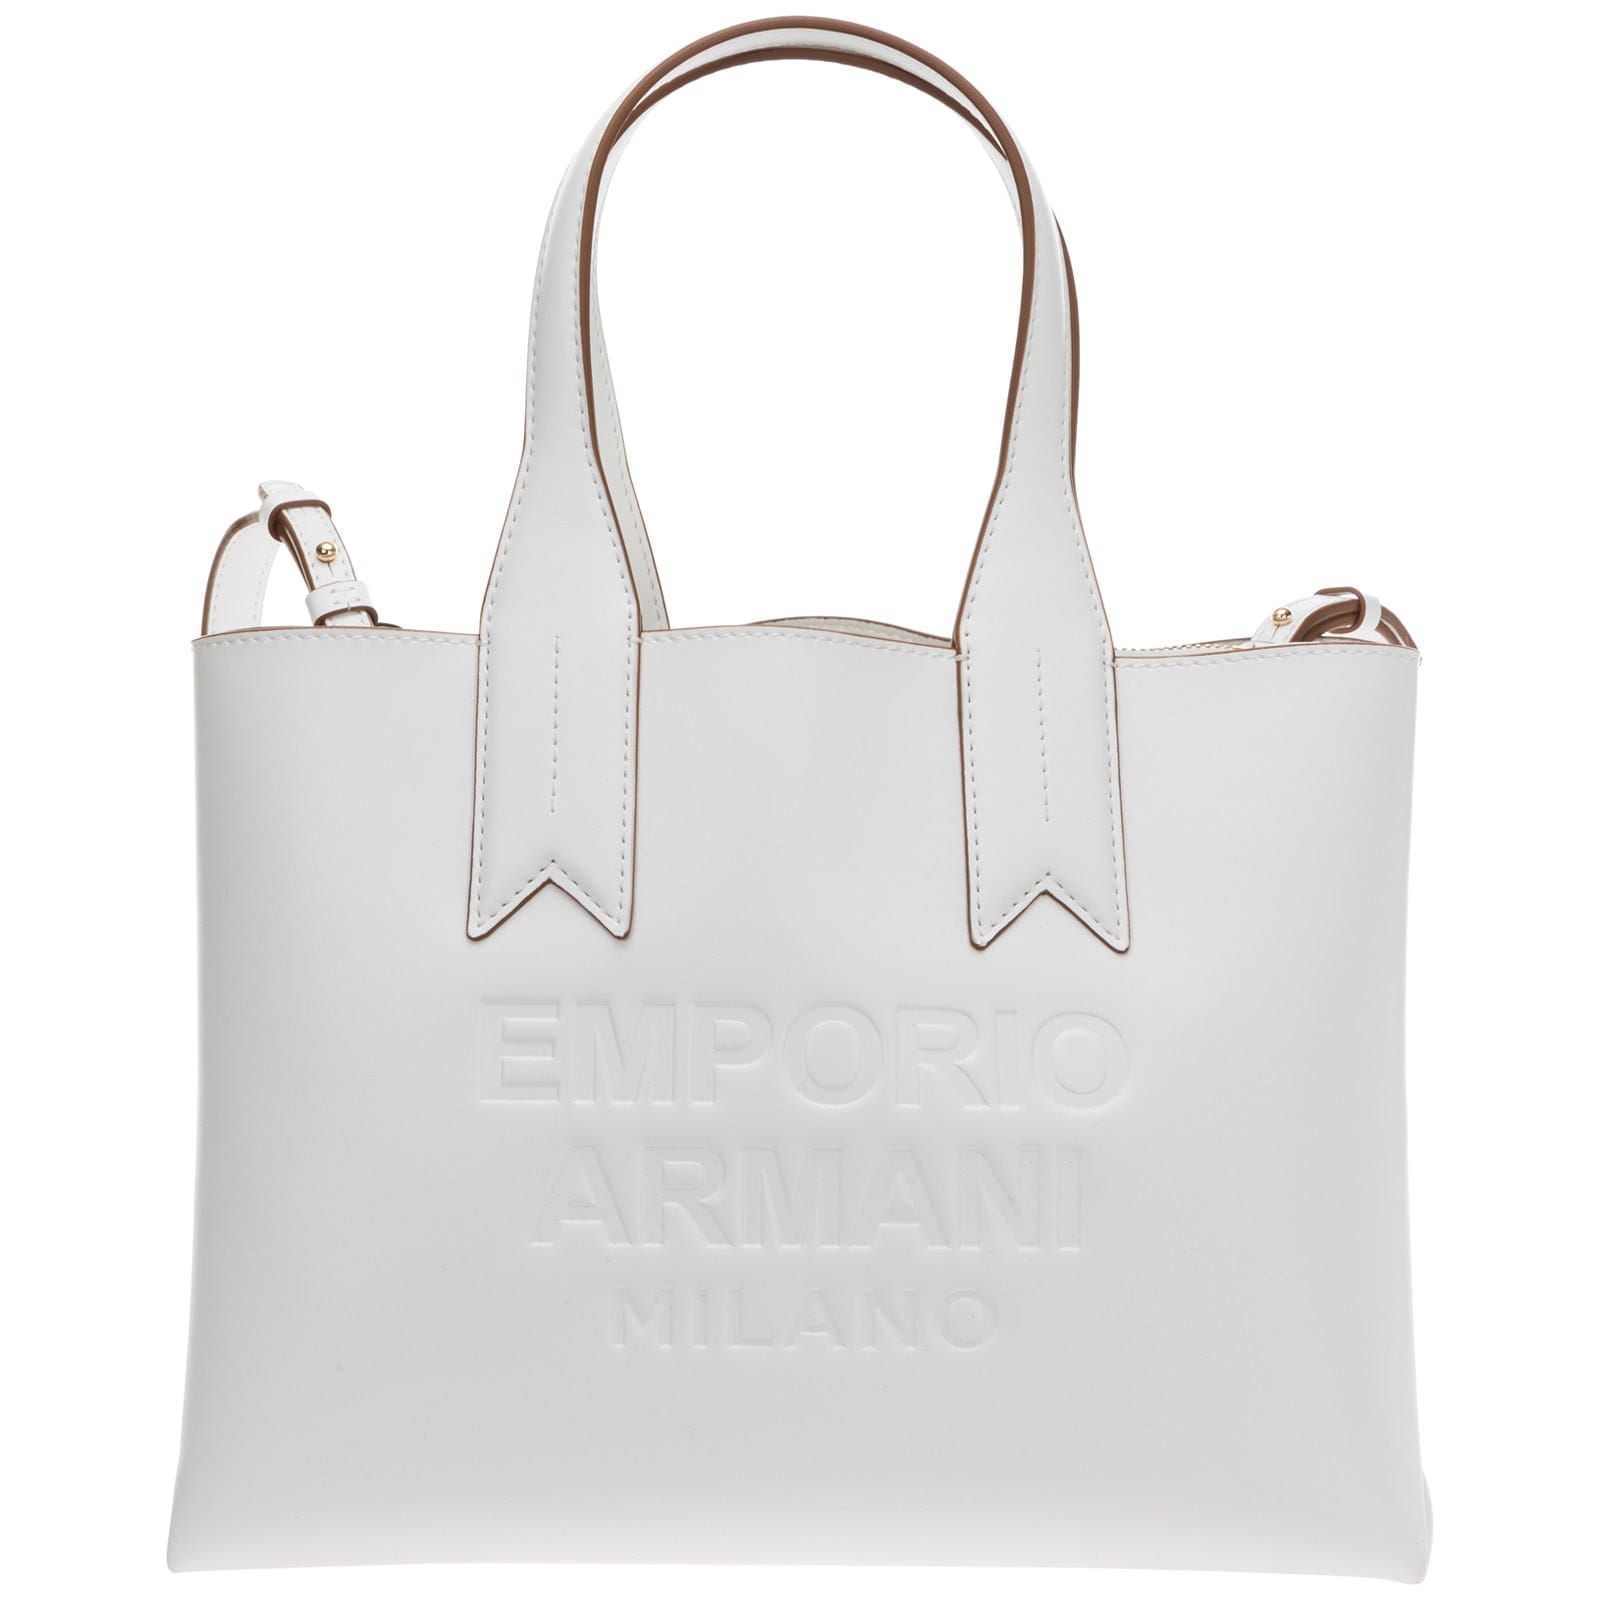 Emporio Armani Madison Handbags